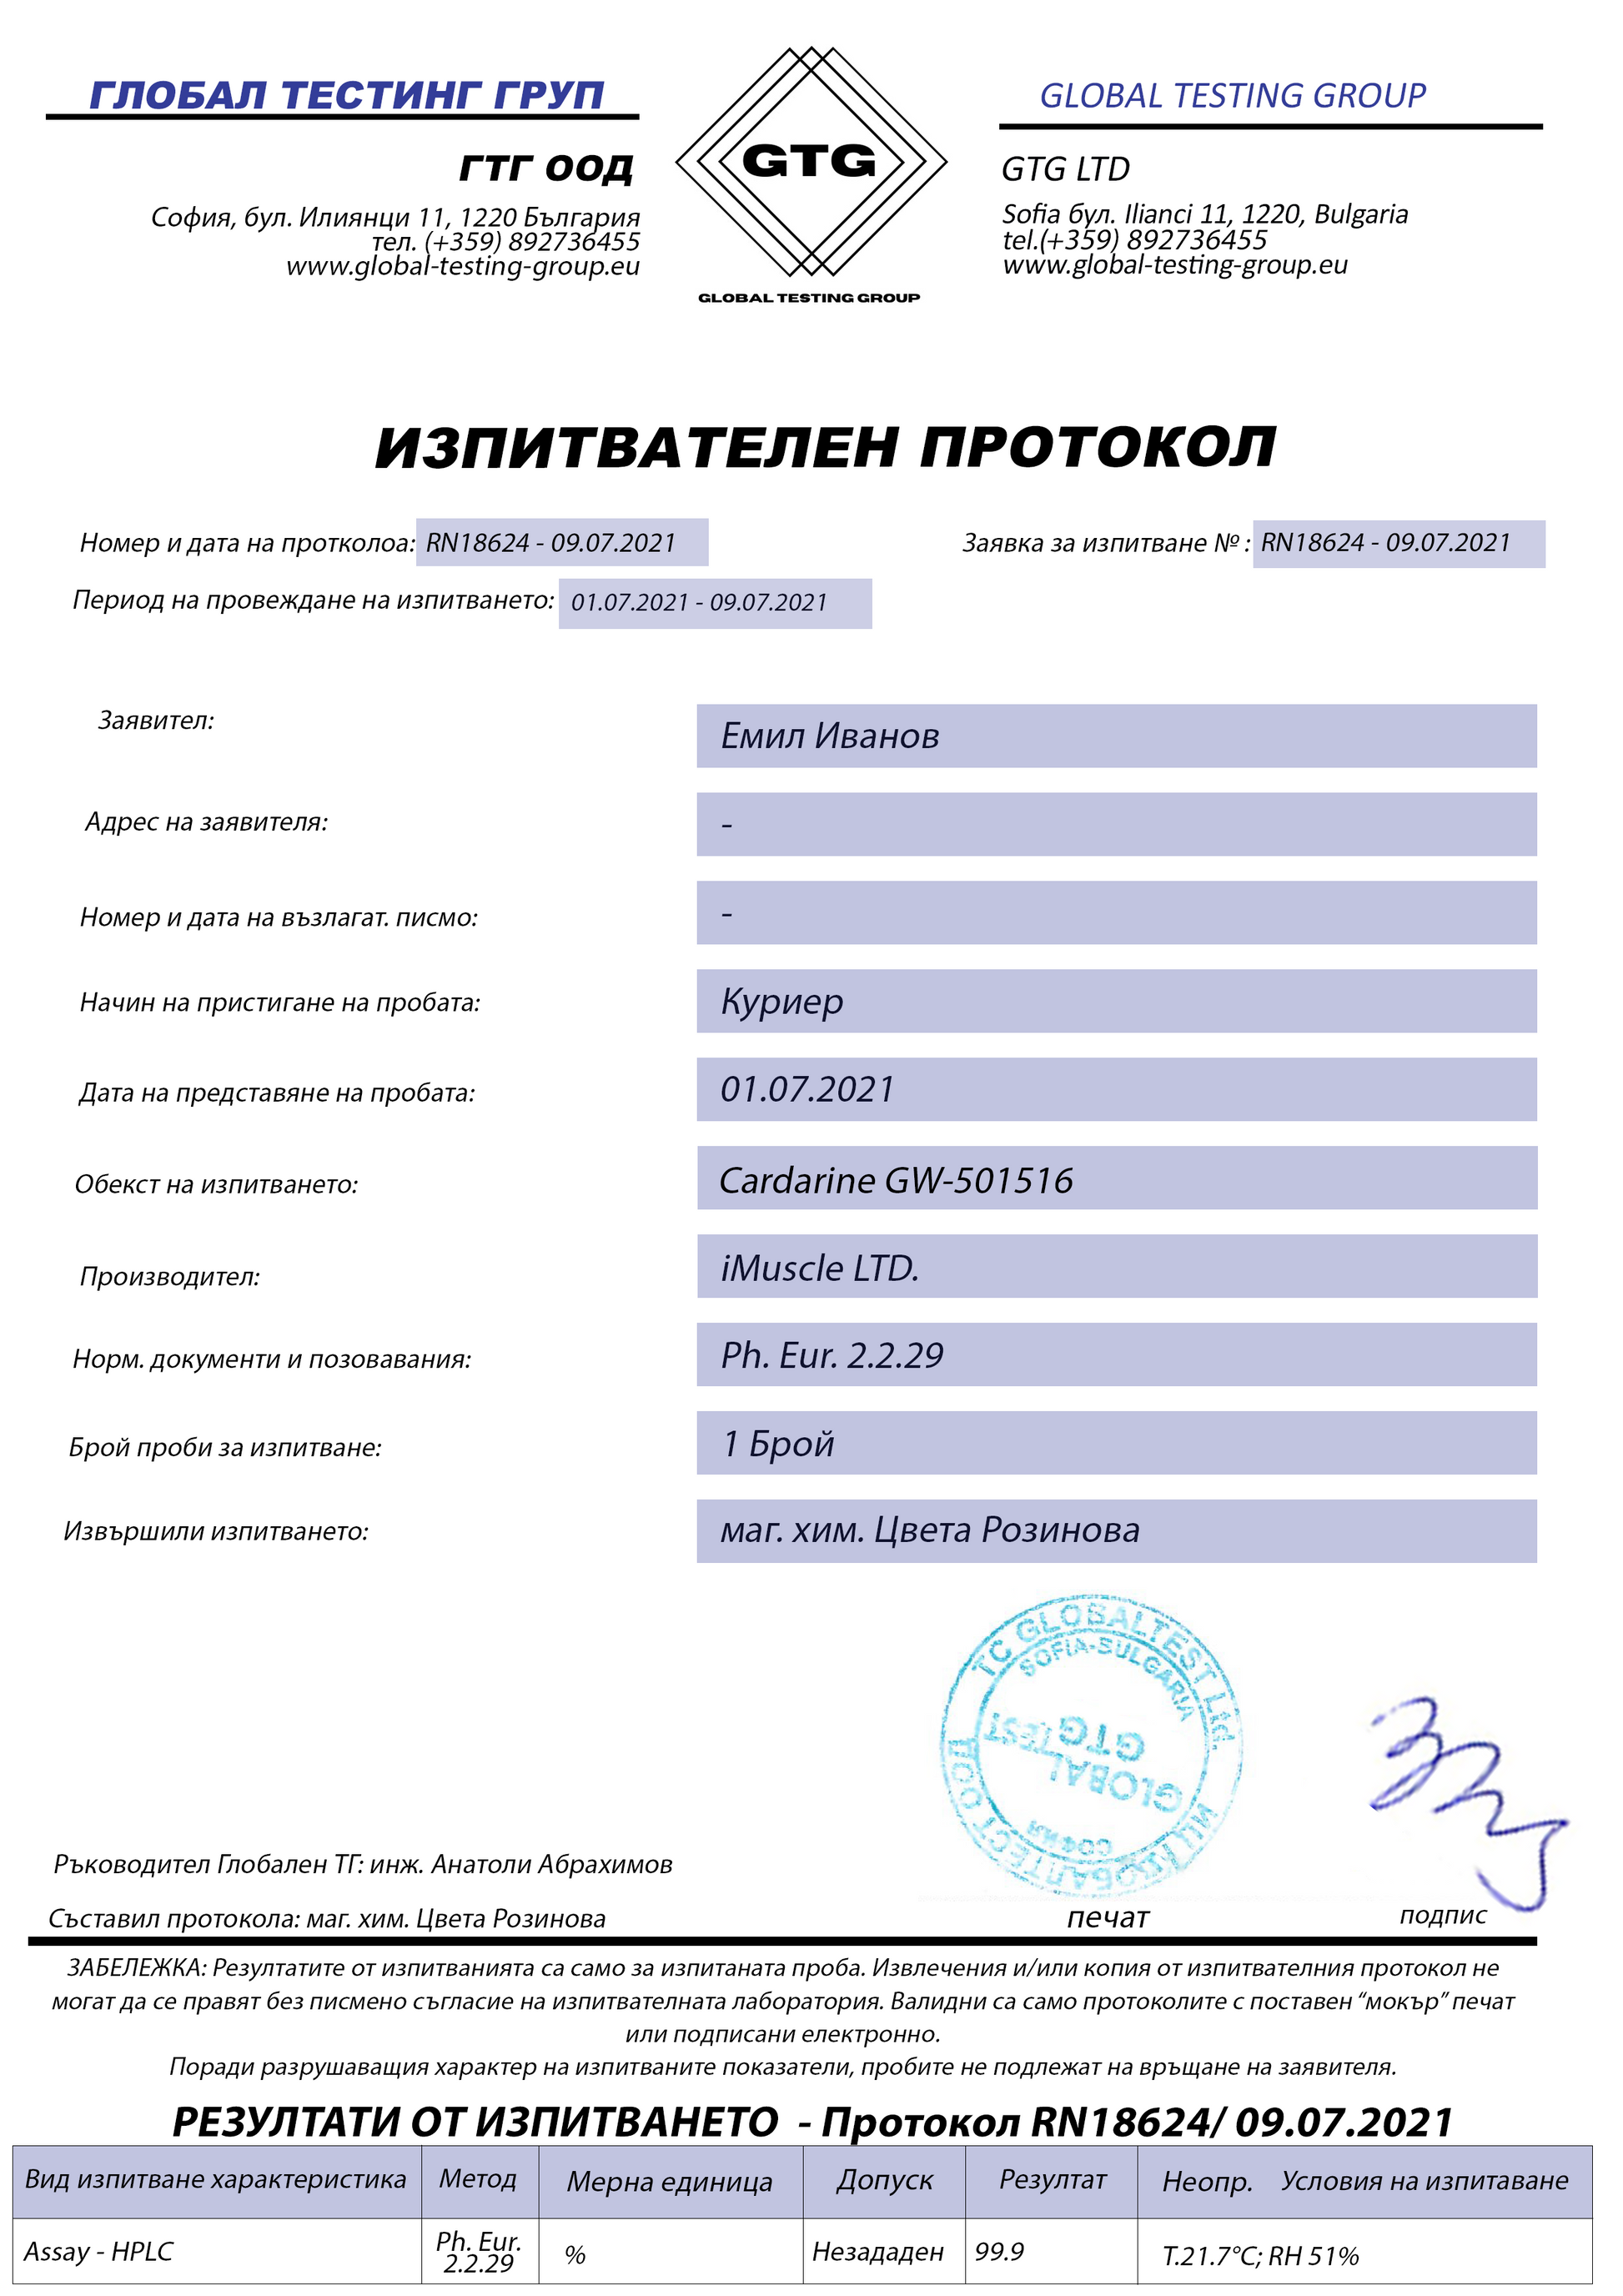 SARM Cardarine GW-501516 quality certificate